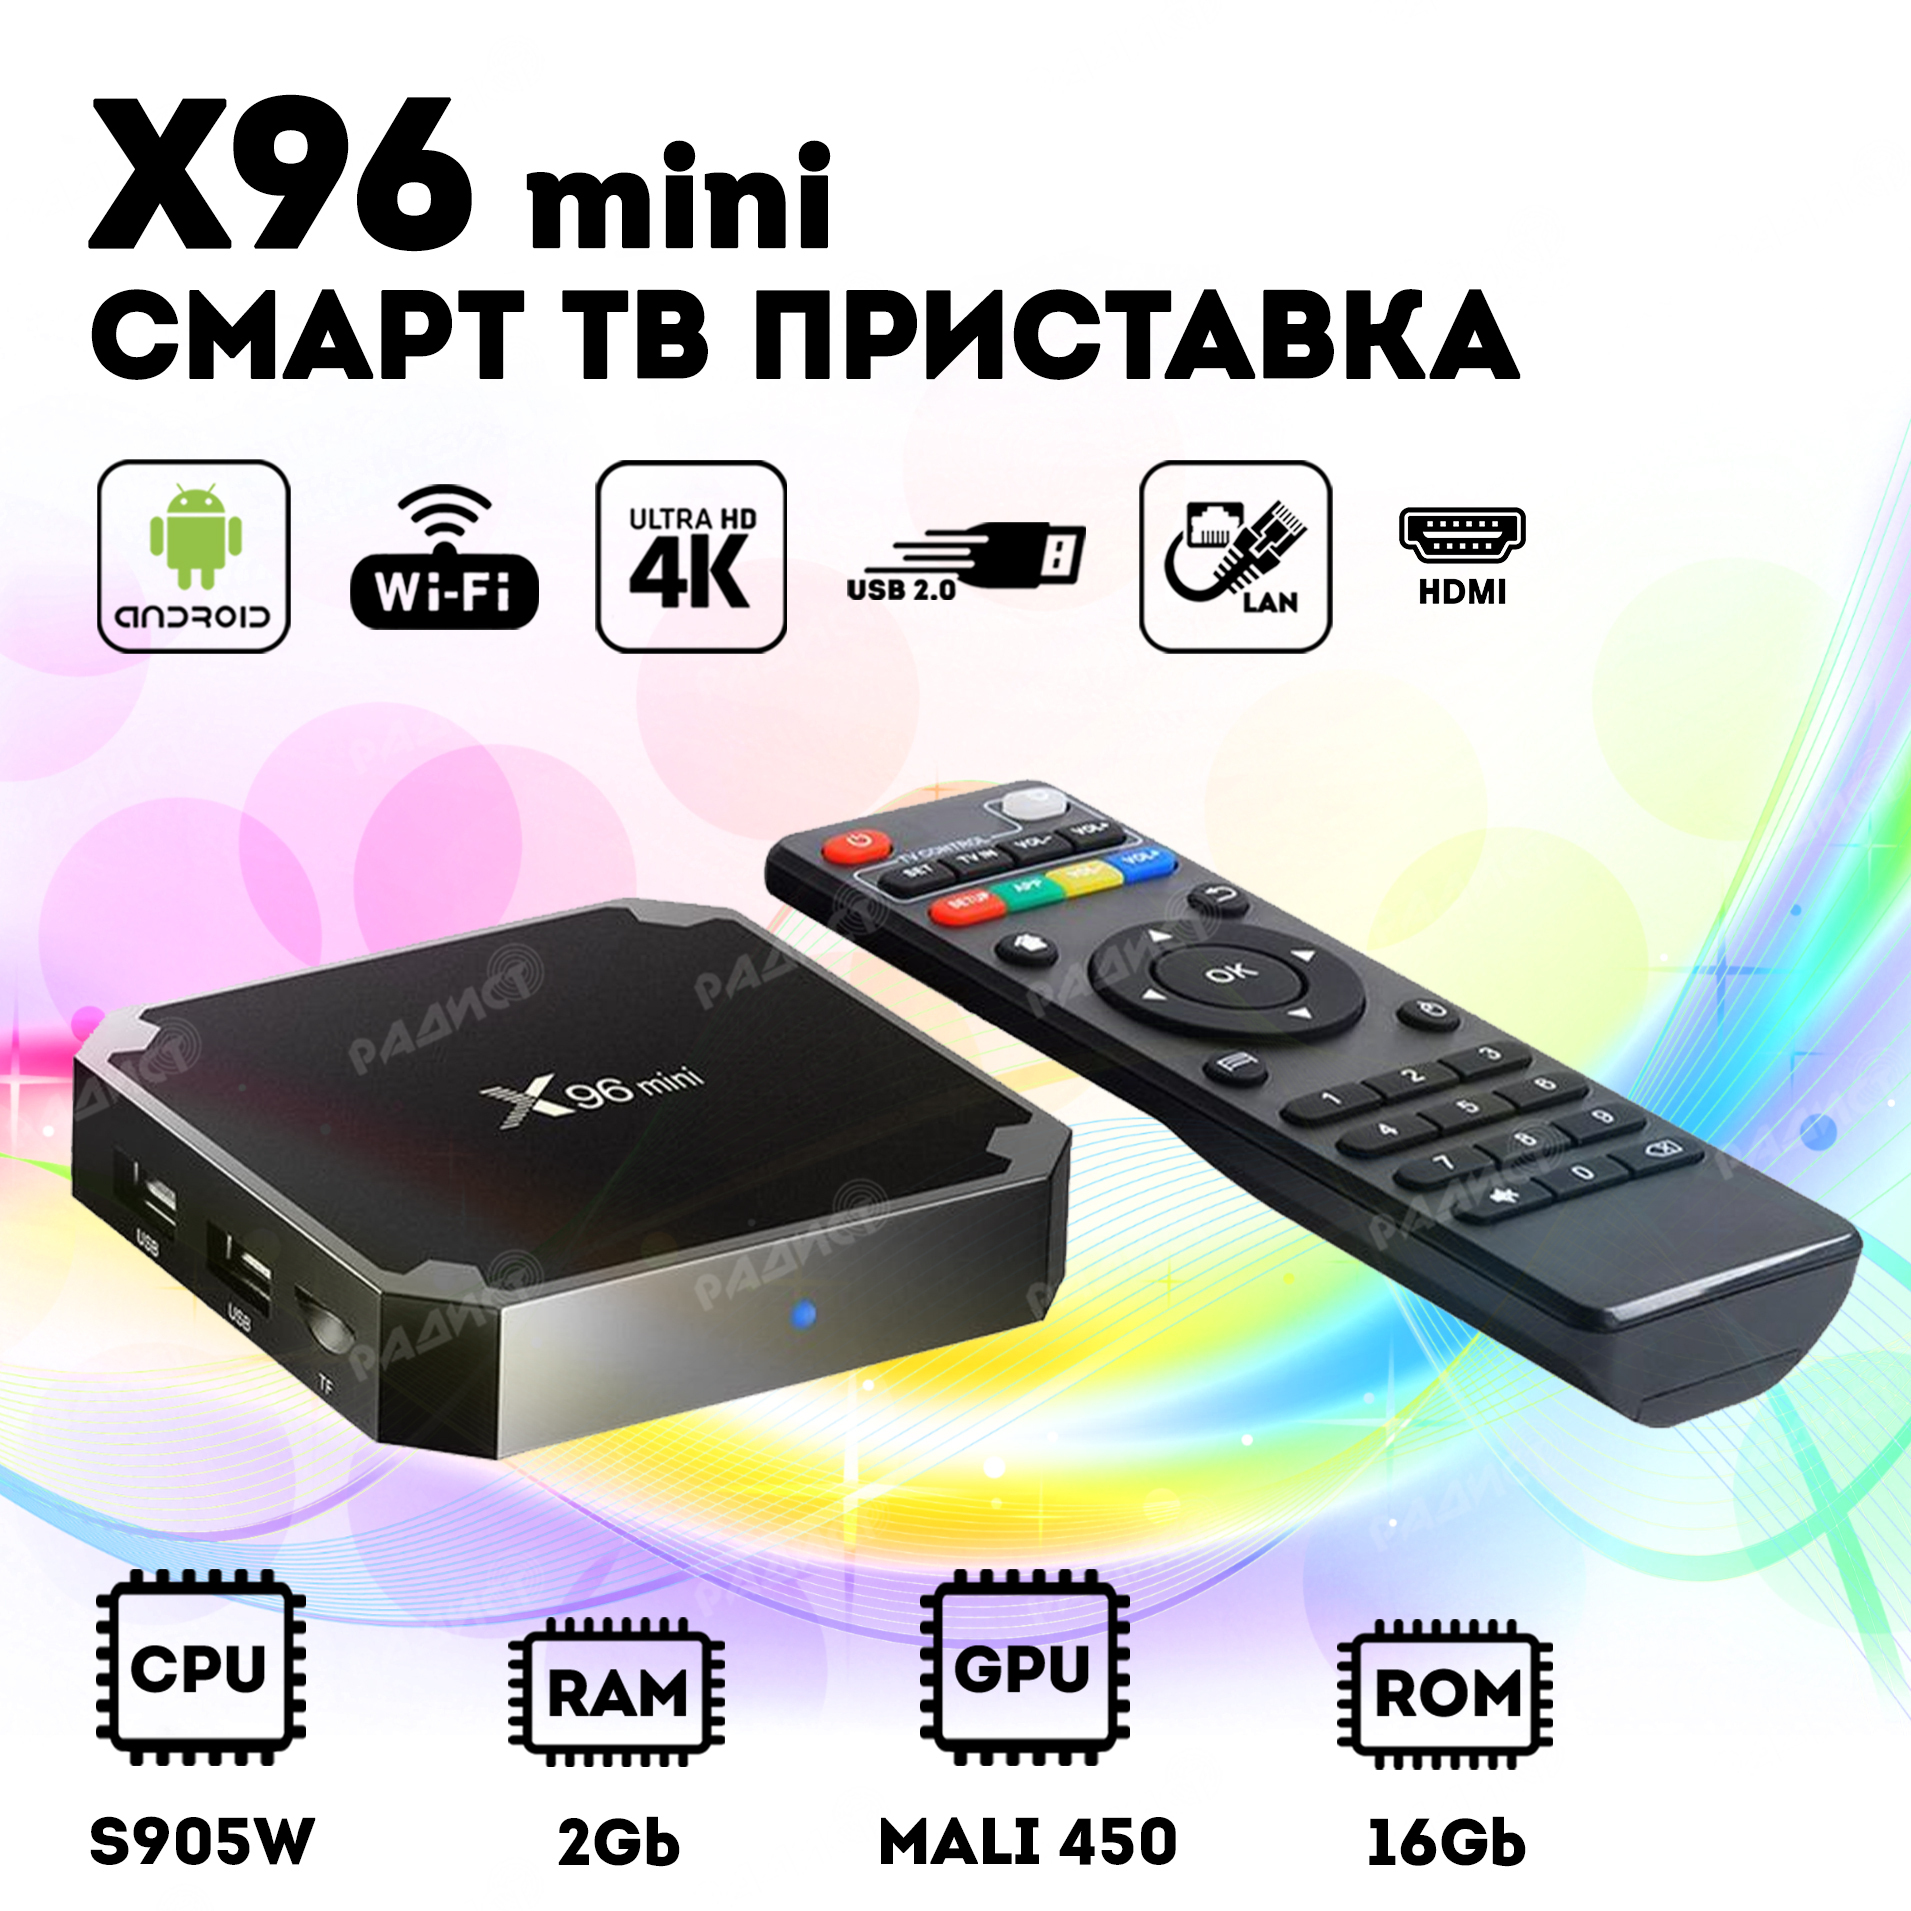 Приставка TV-BOX X96 2GB/16GB Android 6 - Купить товари для дома в  интернет-магазине leo-shop